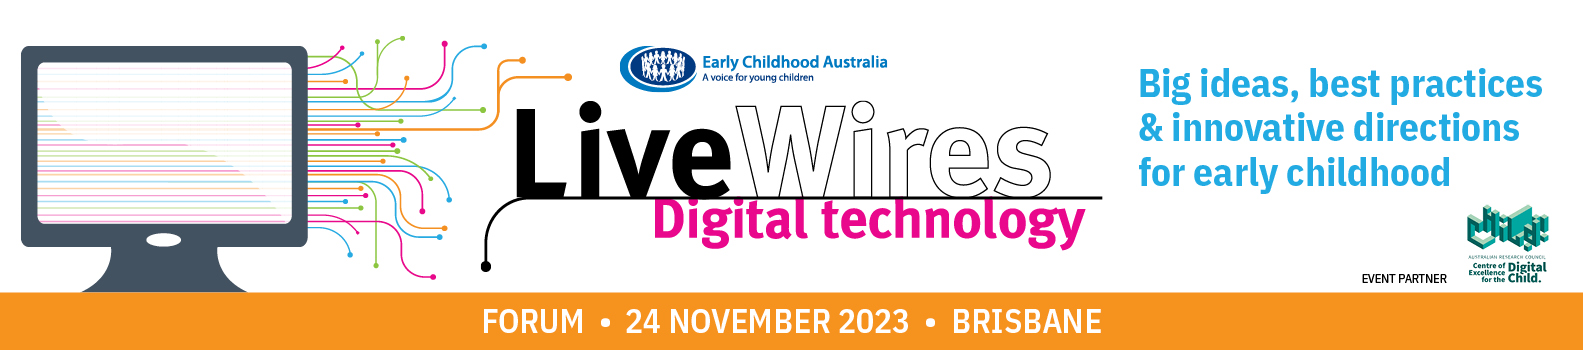 Live Wires Digital technology forum, 24 November 2023, Brisbane